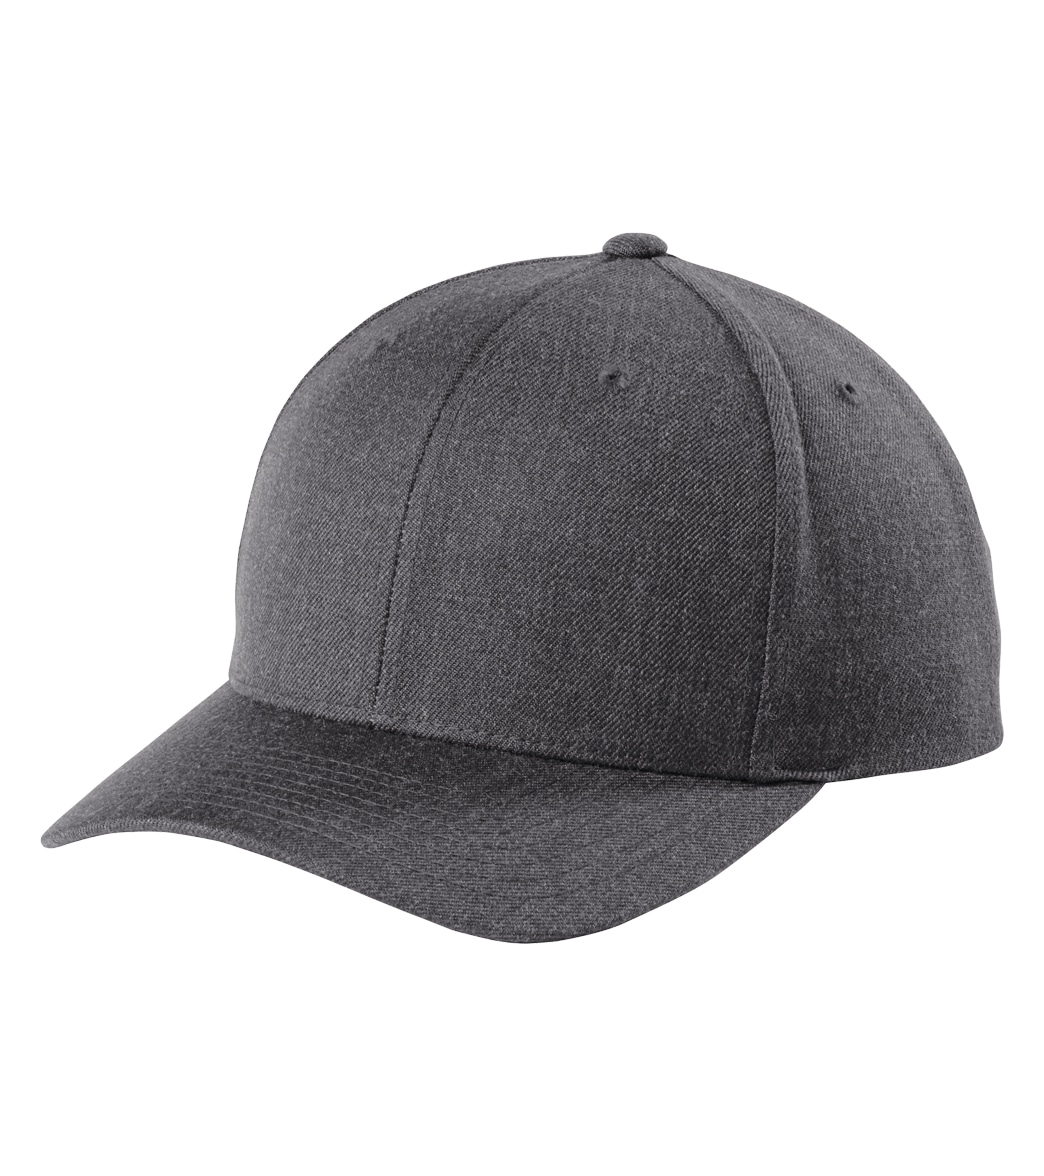 Structured Snapback Hat - Dark Heather Grey One Size - Swimoutlet.com